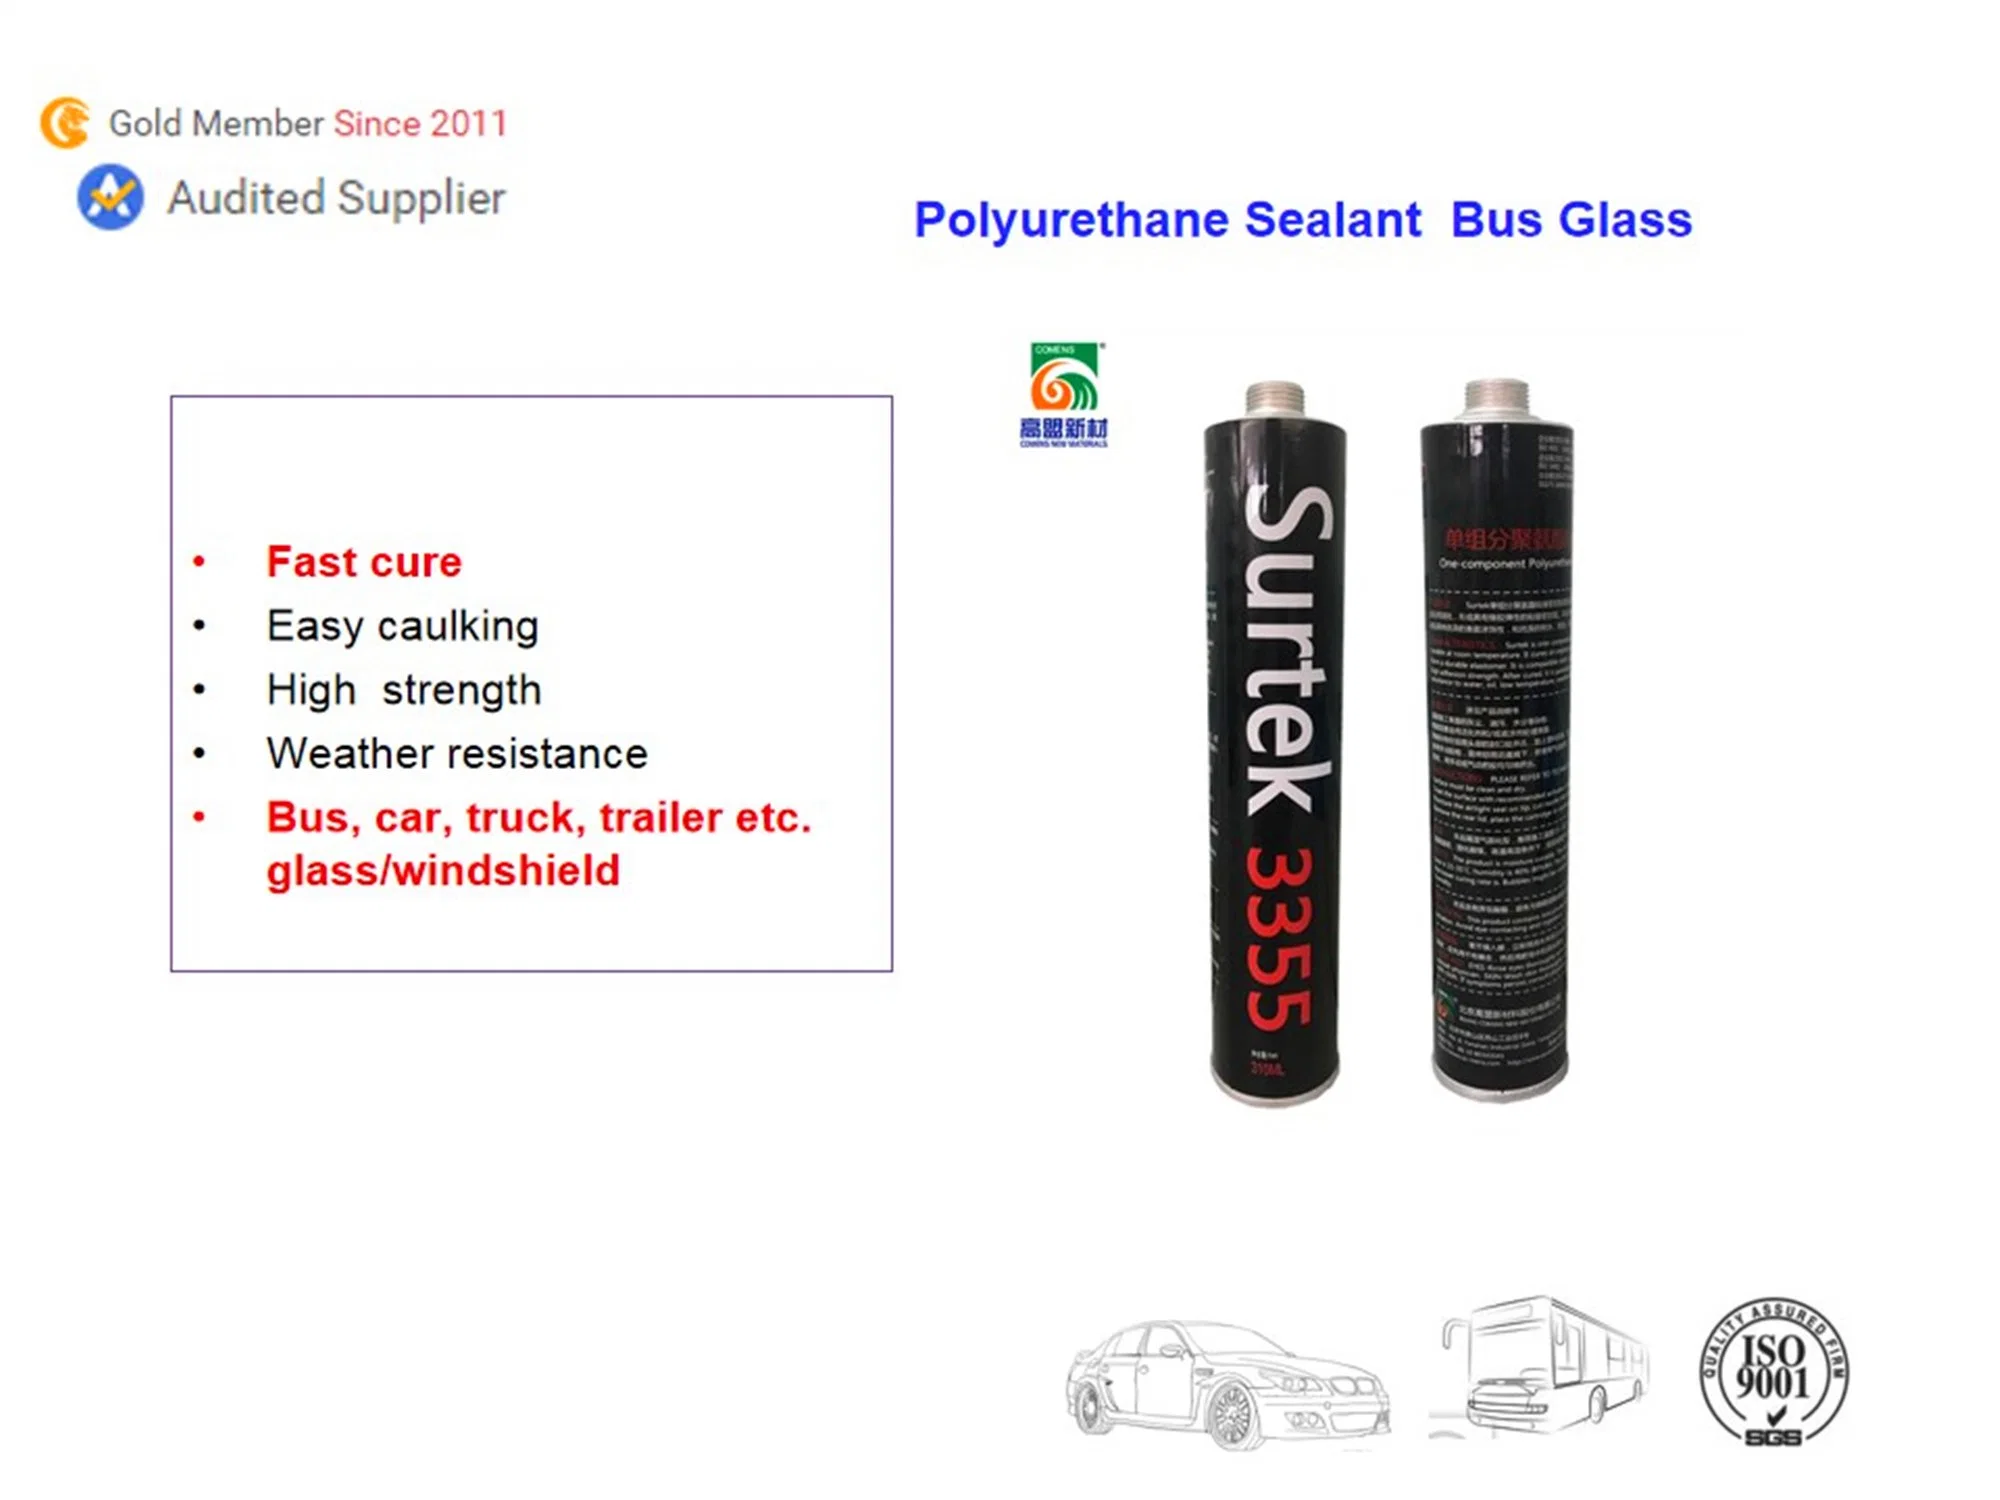 PU Sealant Glass Bonding Adhesive Glue for Windscreen Replacement (Surtek 3355)